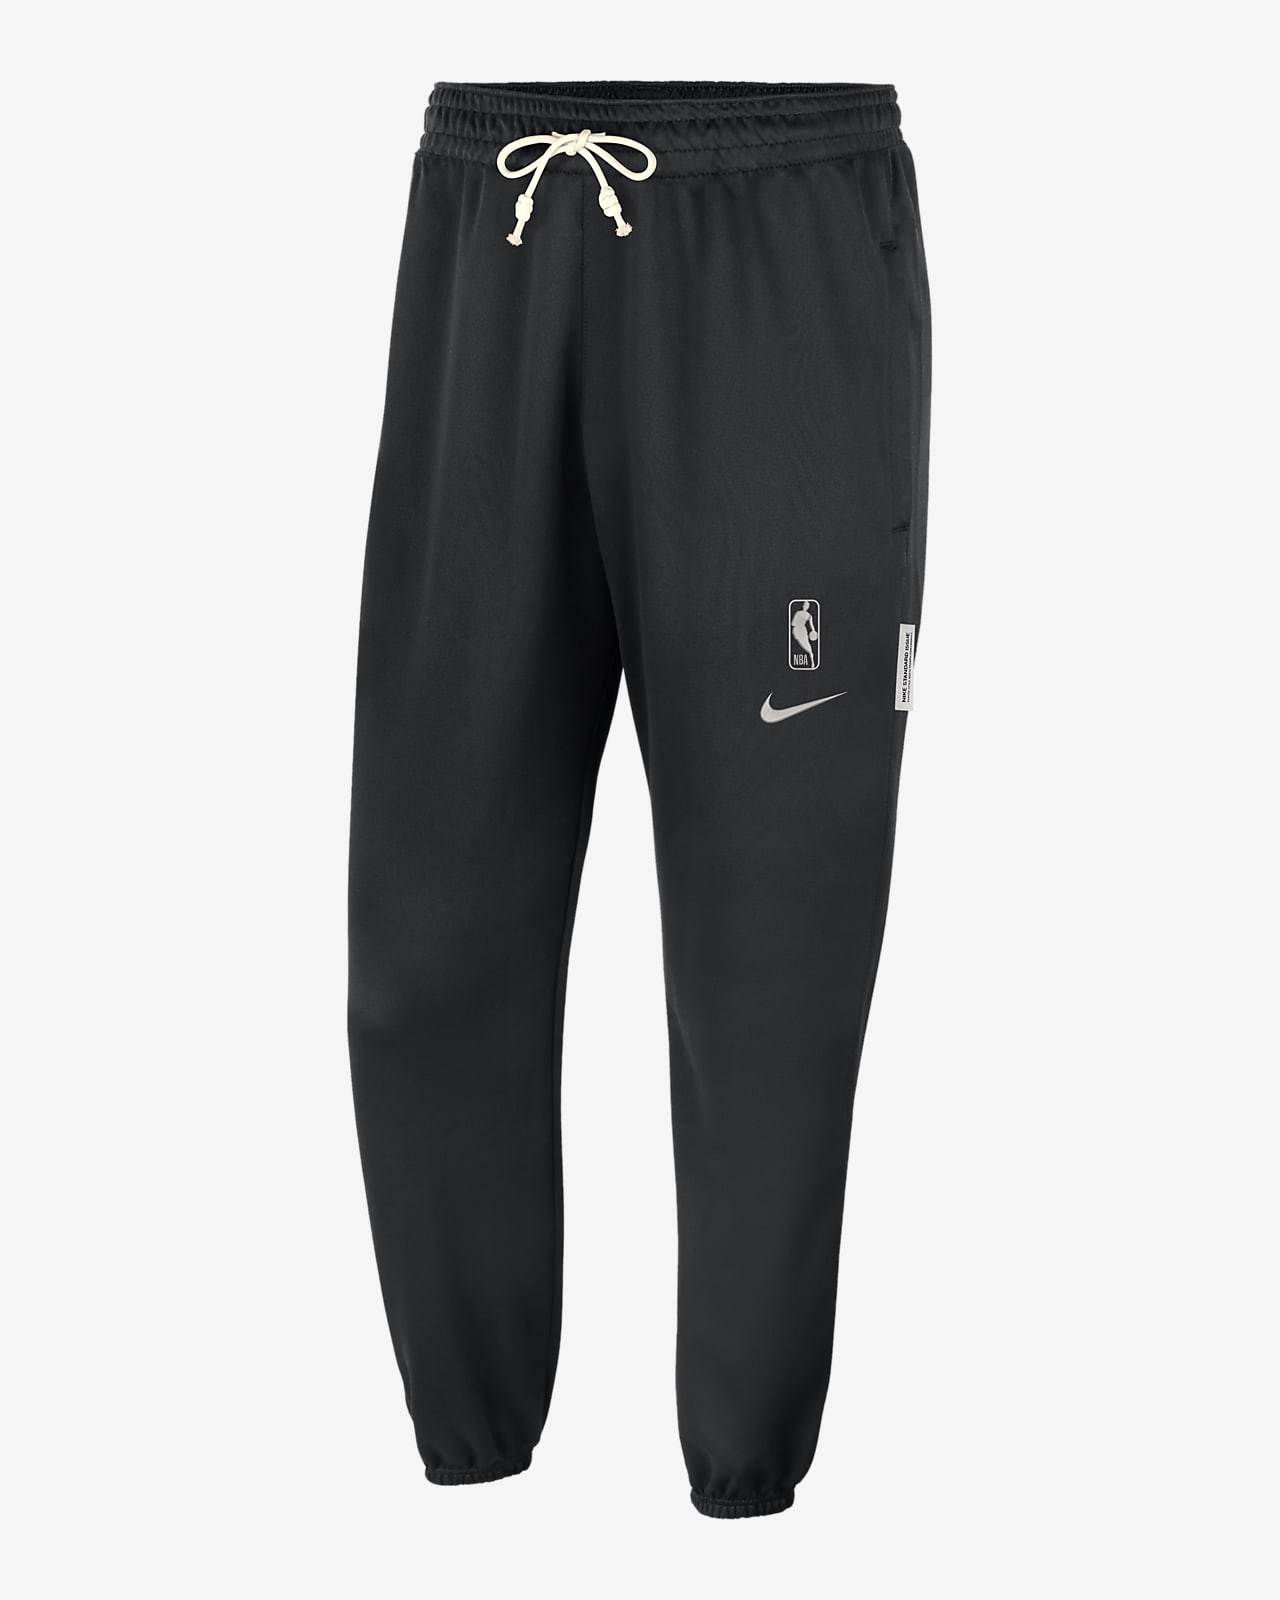 Pantaloni Team 31 Standard Issue Nike Dri-FIT NBA – Uomo